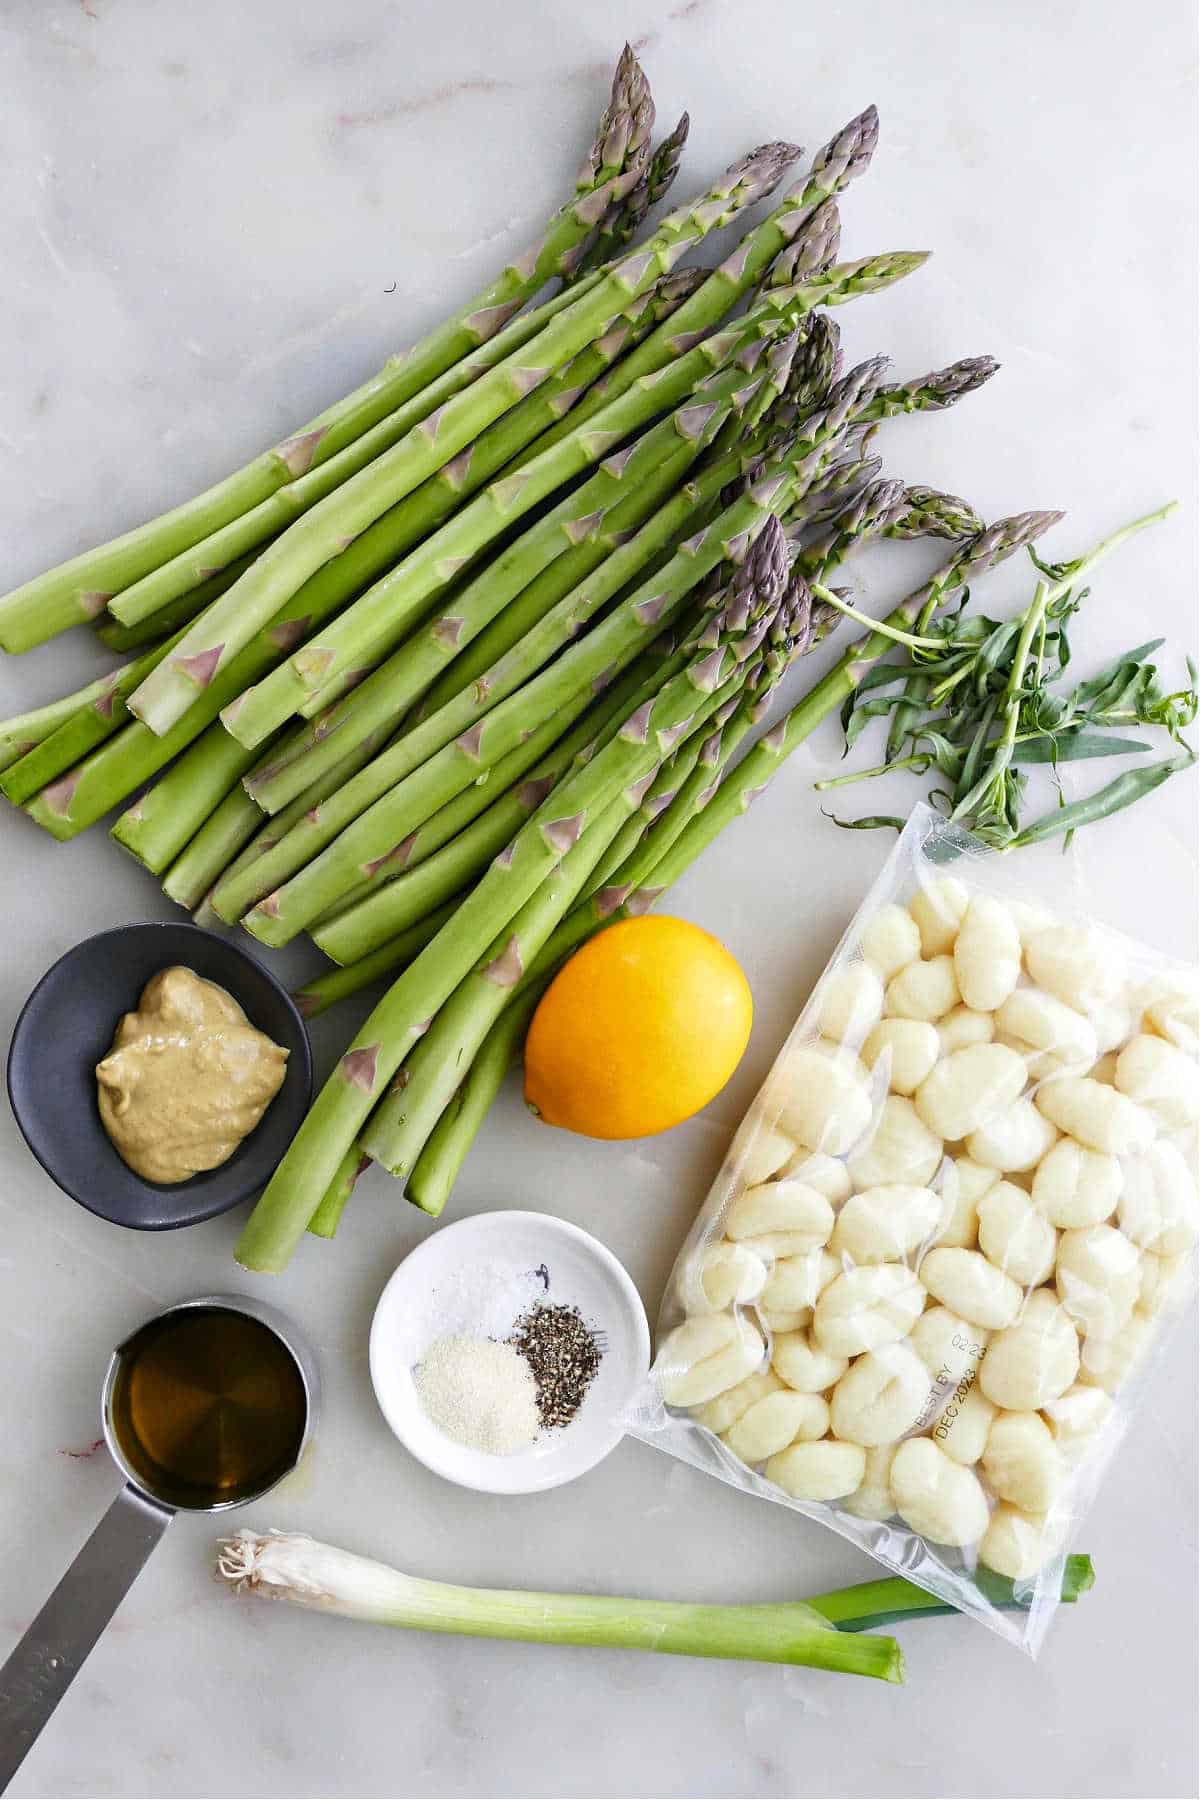 asparagus, tarragon, Meyer lemon, gnocchi, scallion, olive oil, and seasonings on a plate